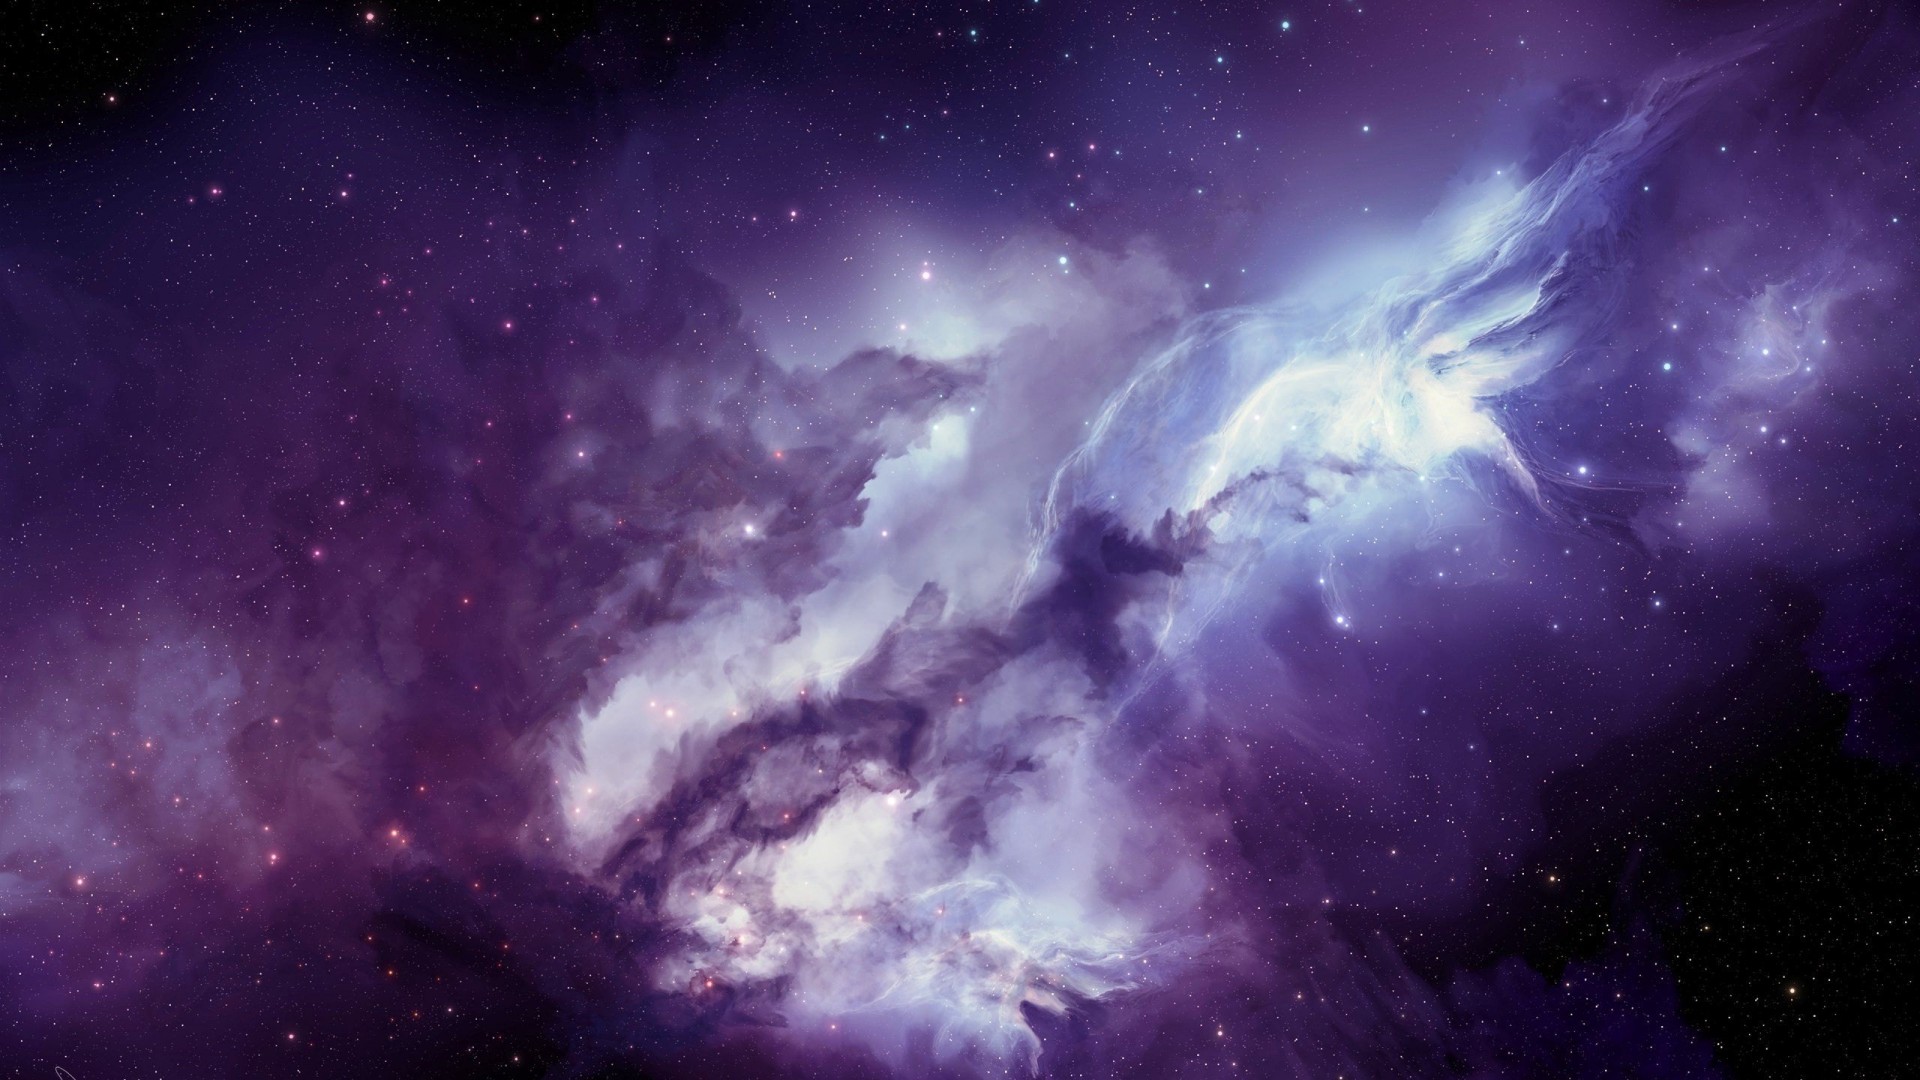 Deep Space Nebula Wallpaper for Desktop 1920x1080